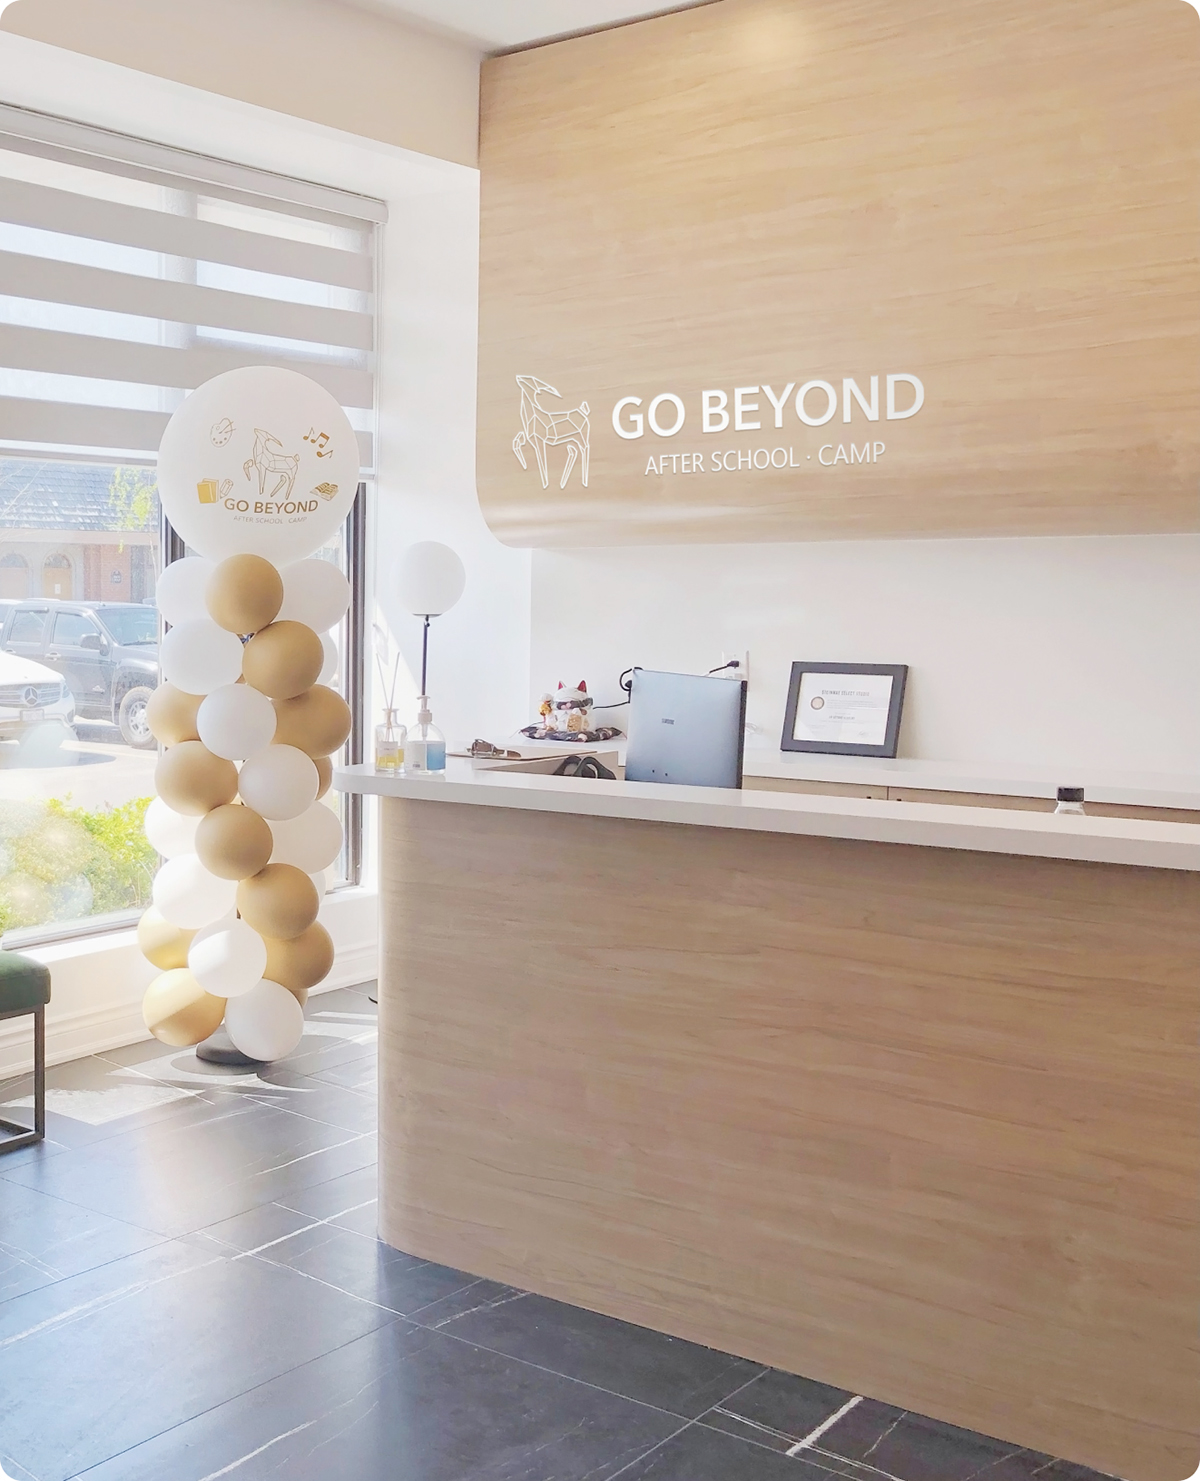 go beyond academy store interior image